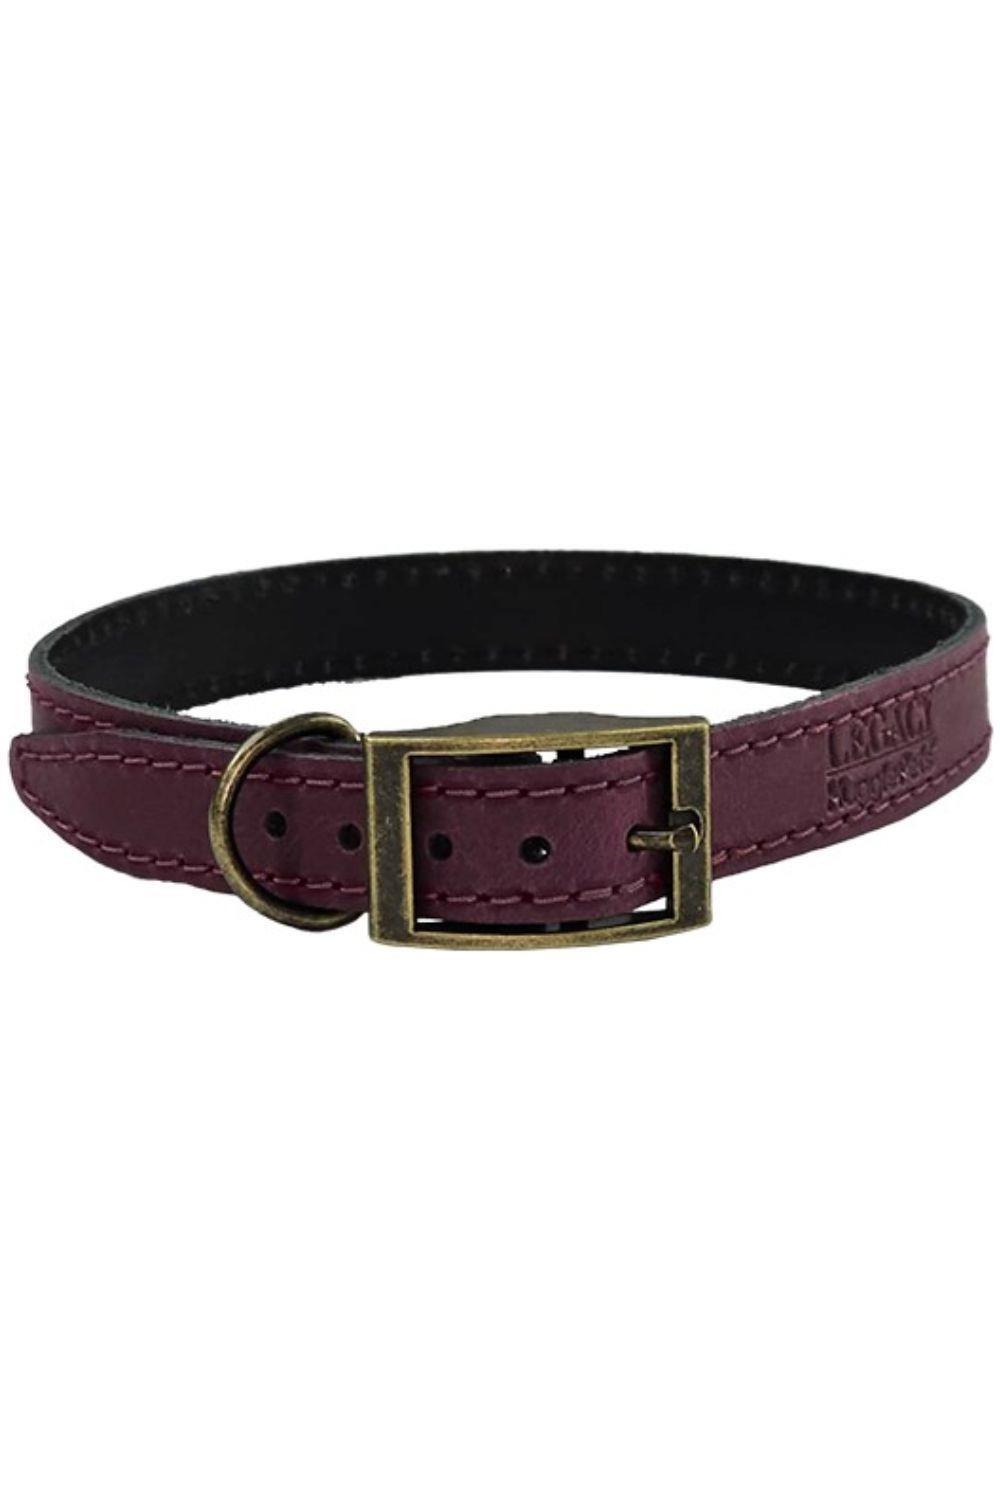 HugglePets Legacy Leather Dog Collar 1/2